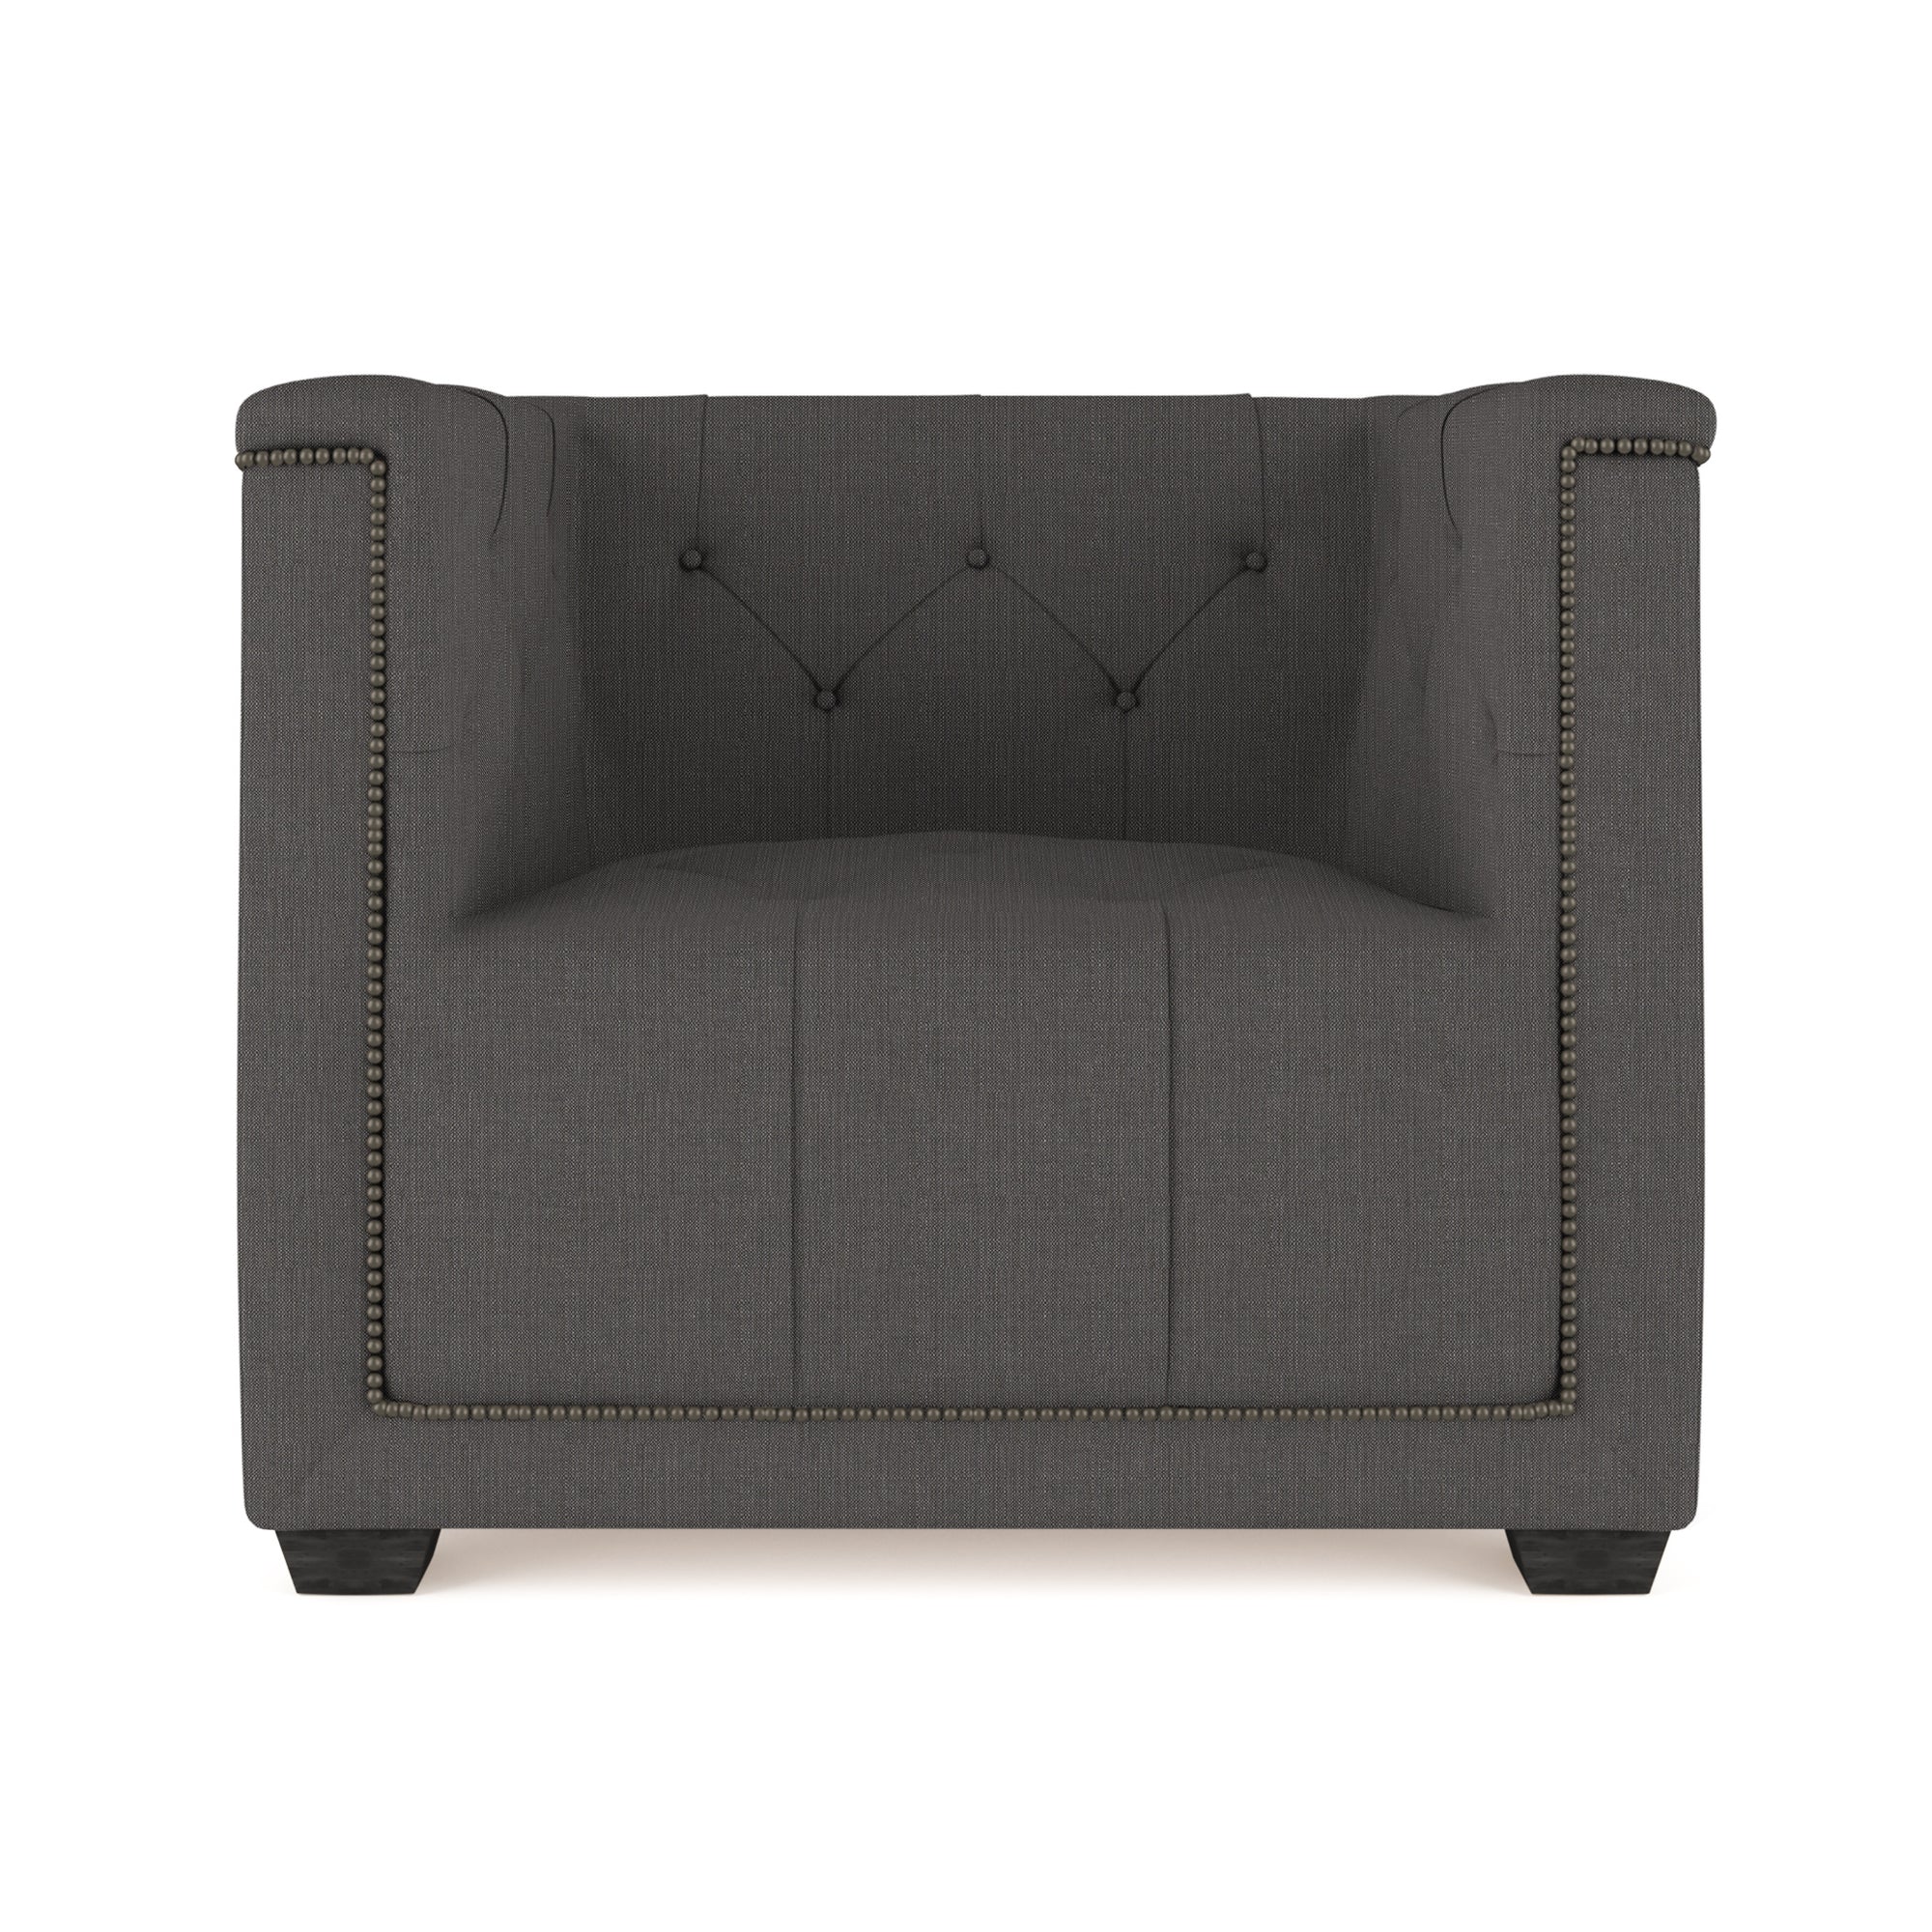 Hudson Chair - Graphite Box Weave Linen